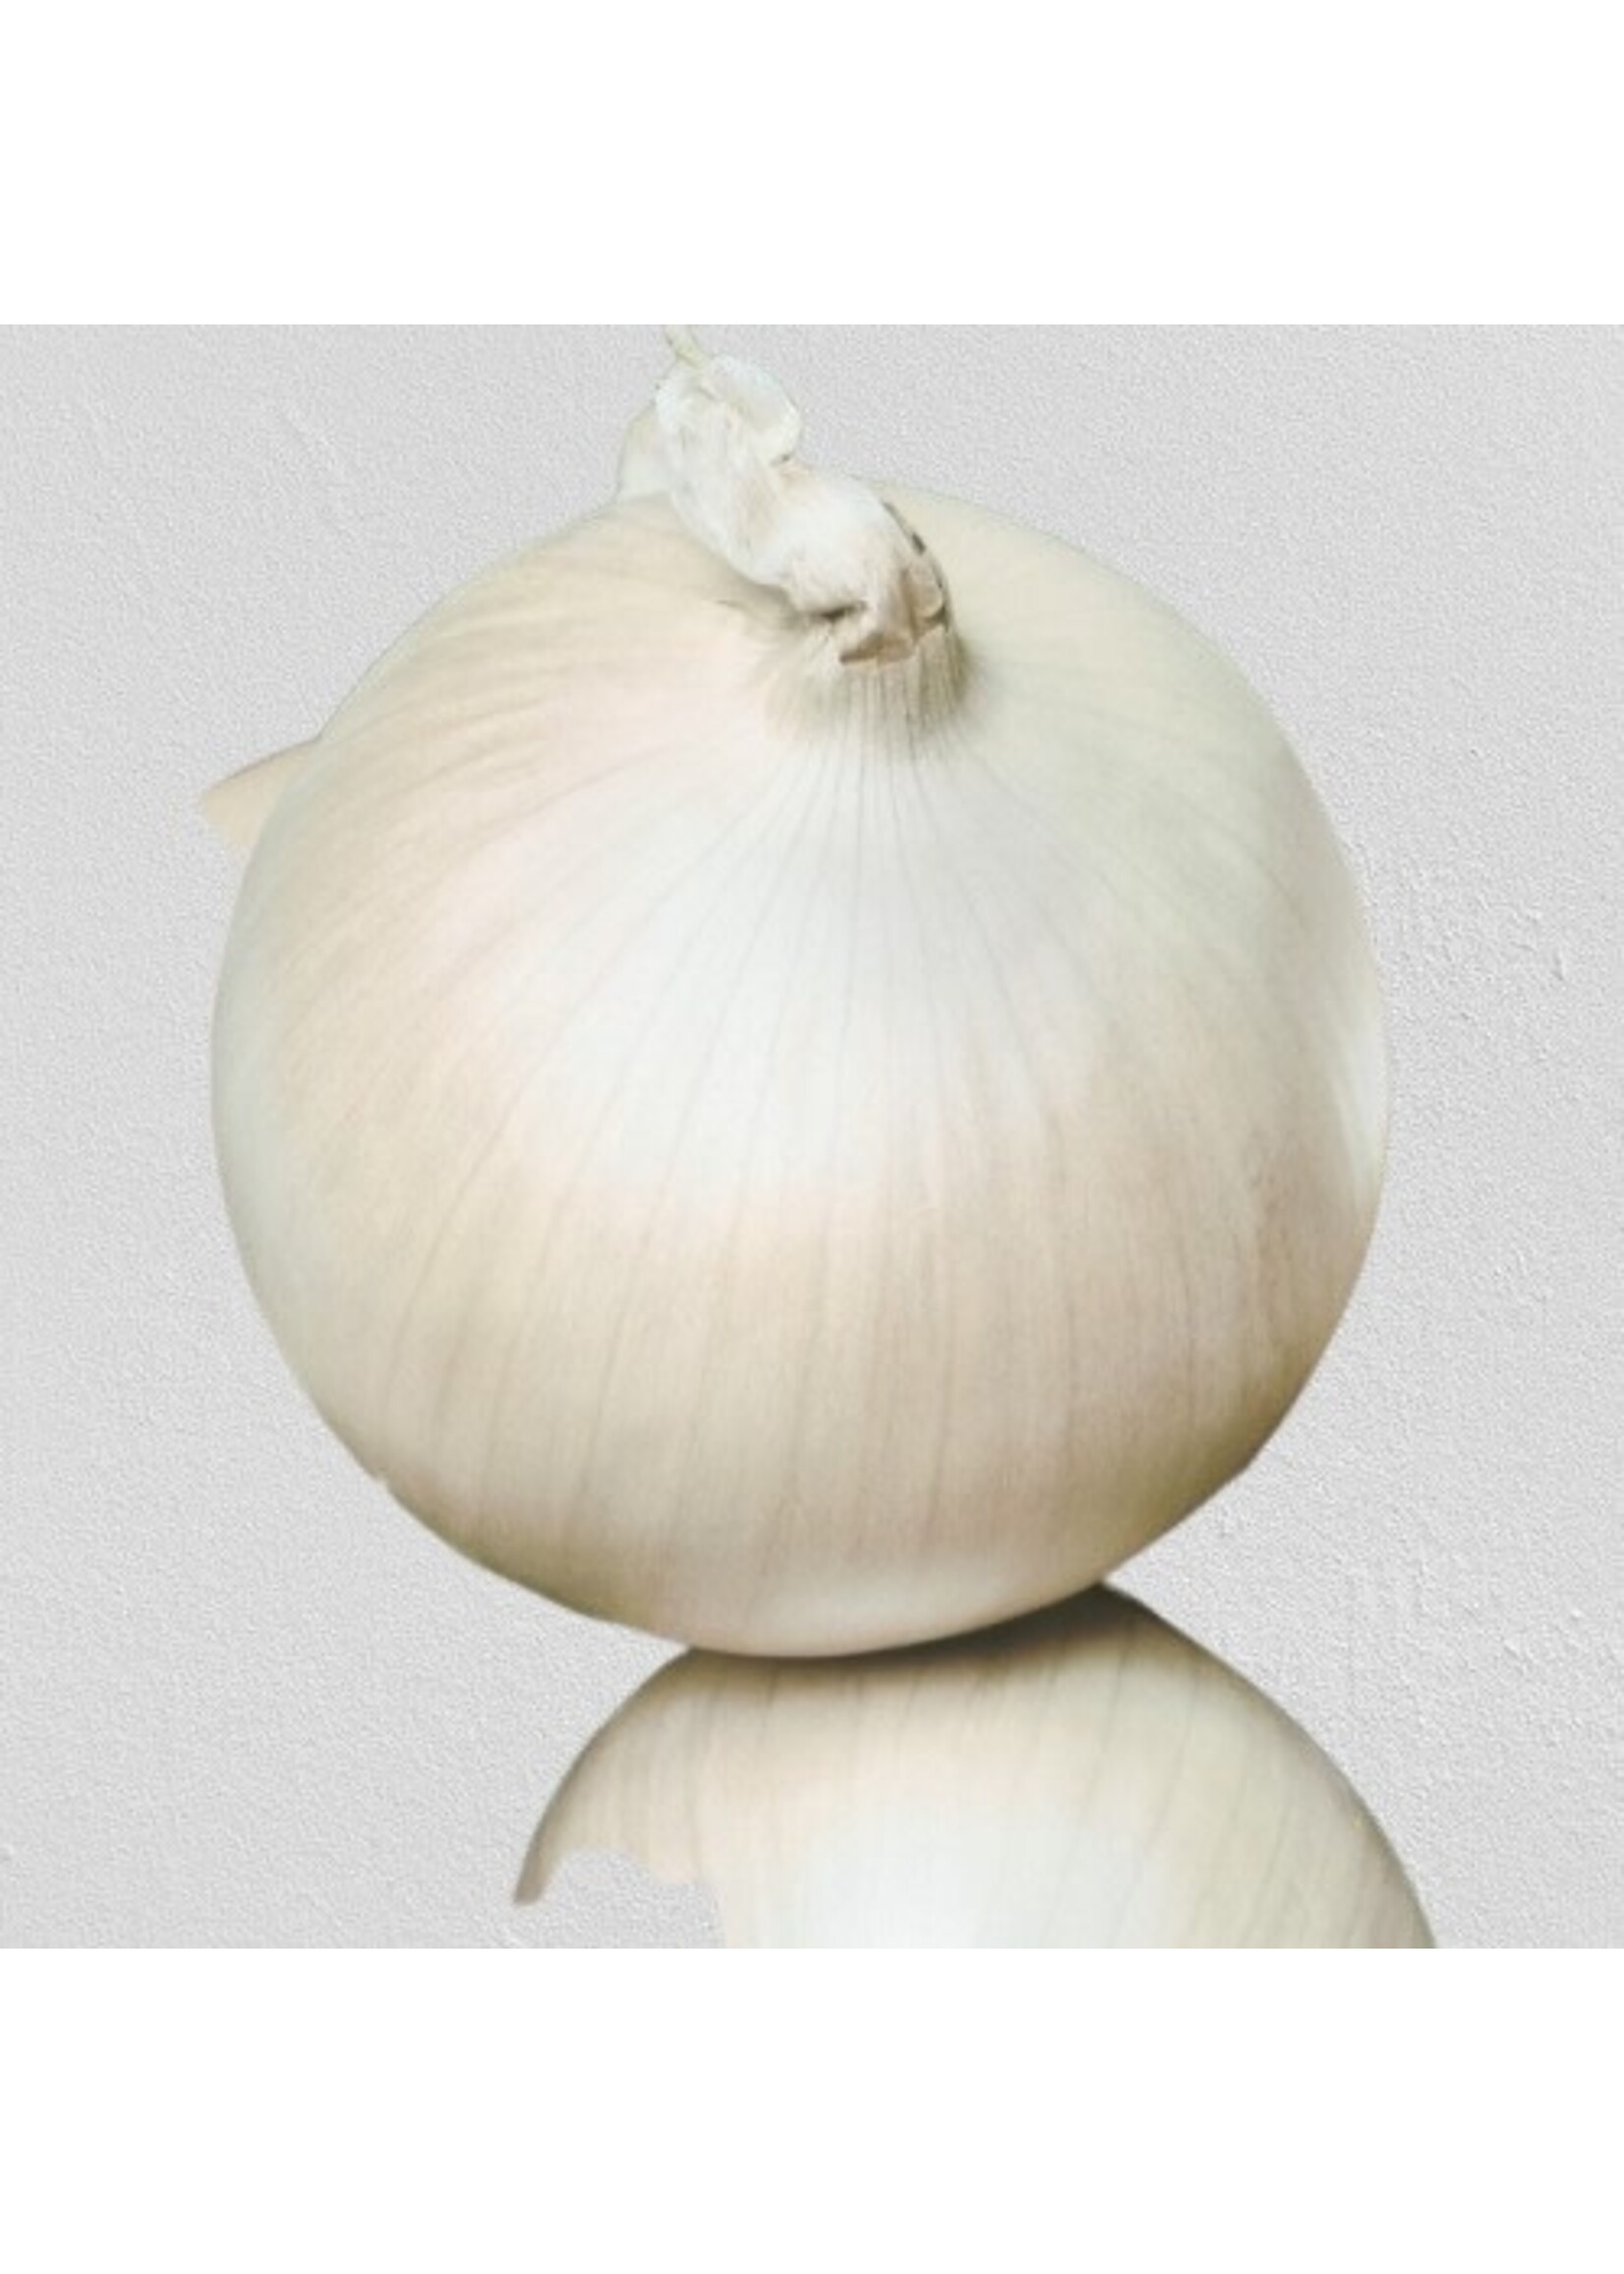 Heirloom Seeds(BIRRI) Onion – White Spanish